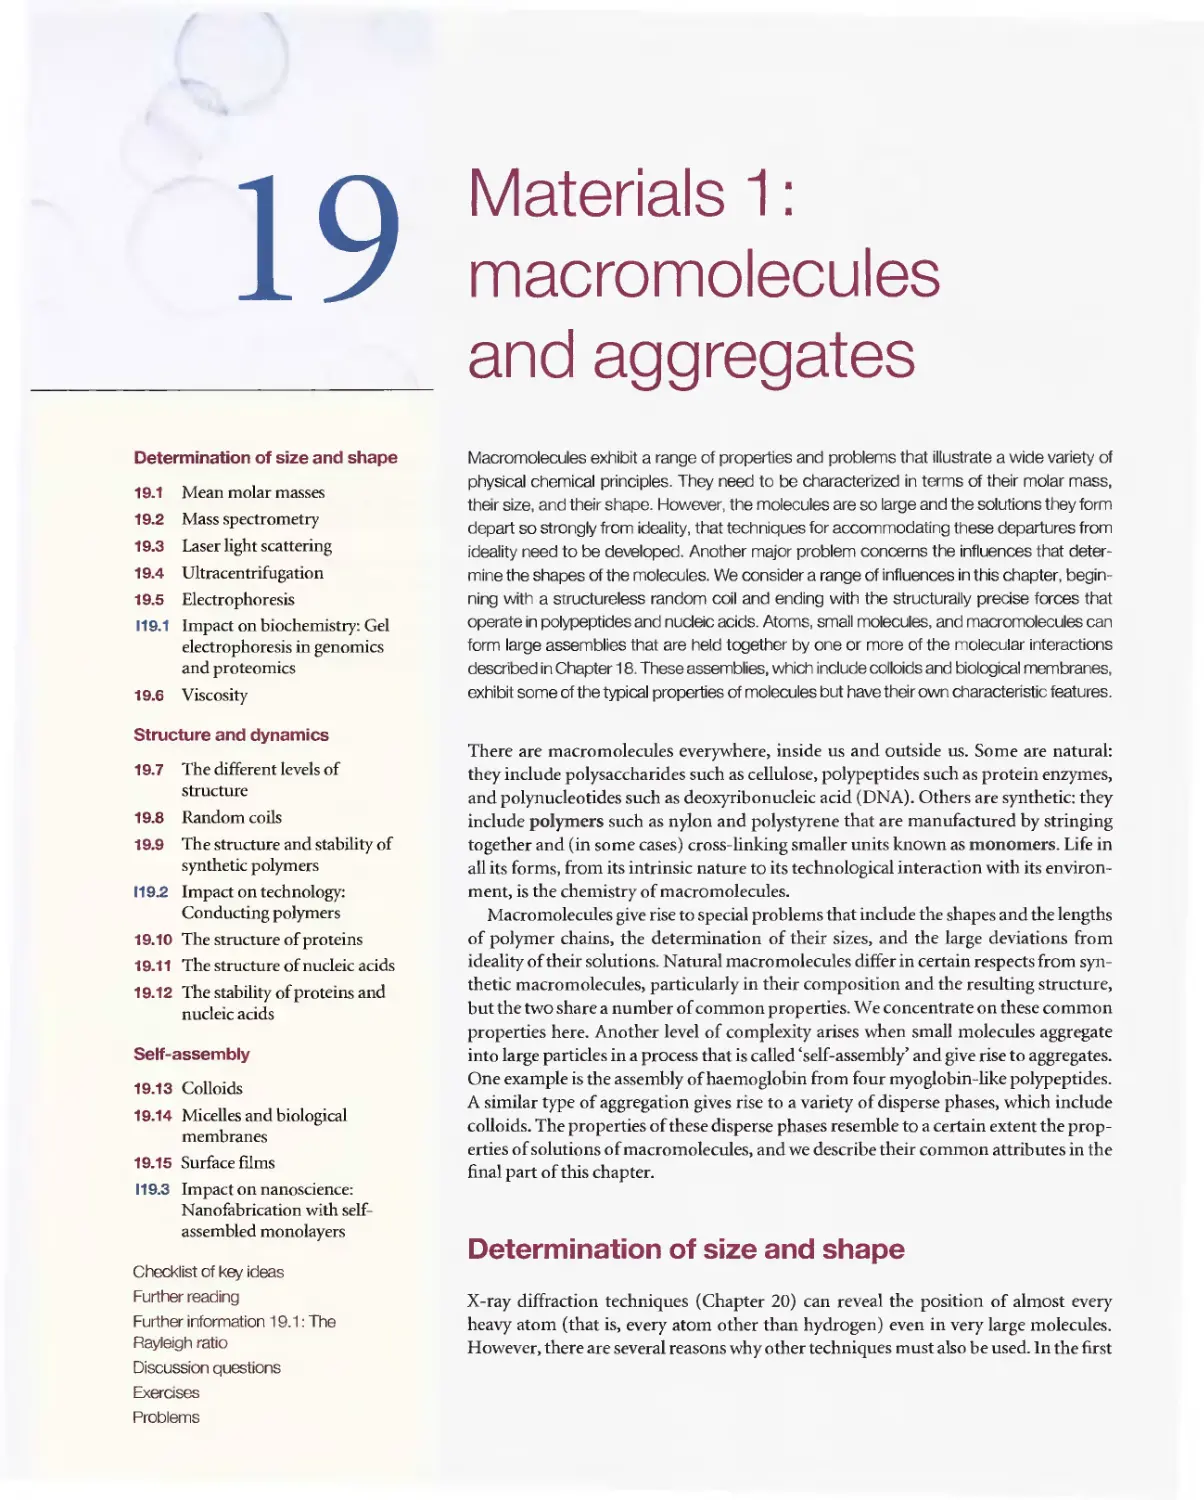 19 - Materials 1 - Macromolecules and aggregates